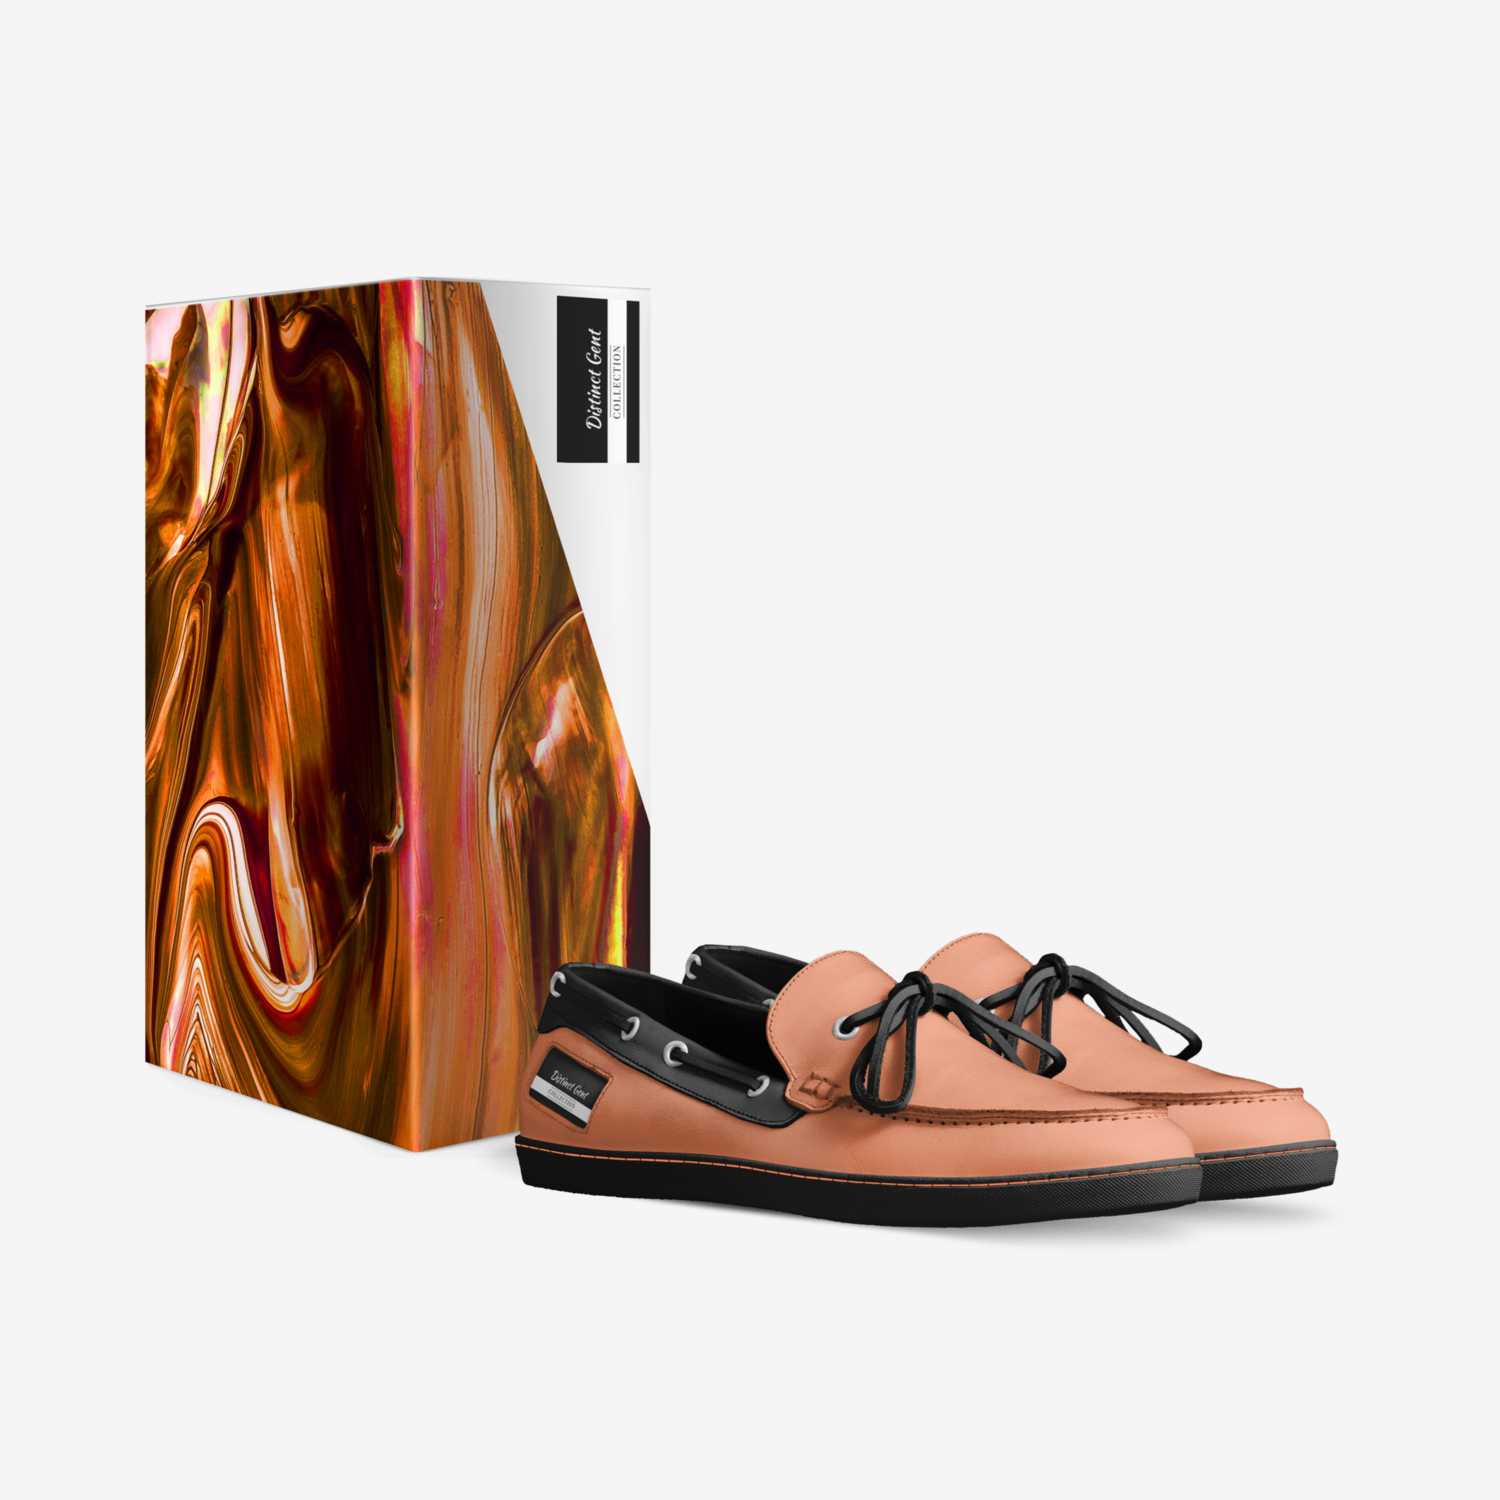 Distinct Gent custom made in Italy shoes by Jonathon Cloyd | Box view